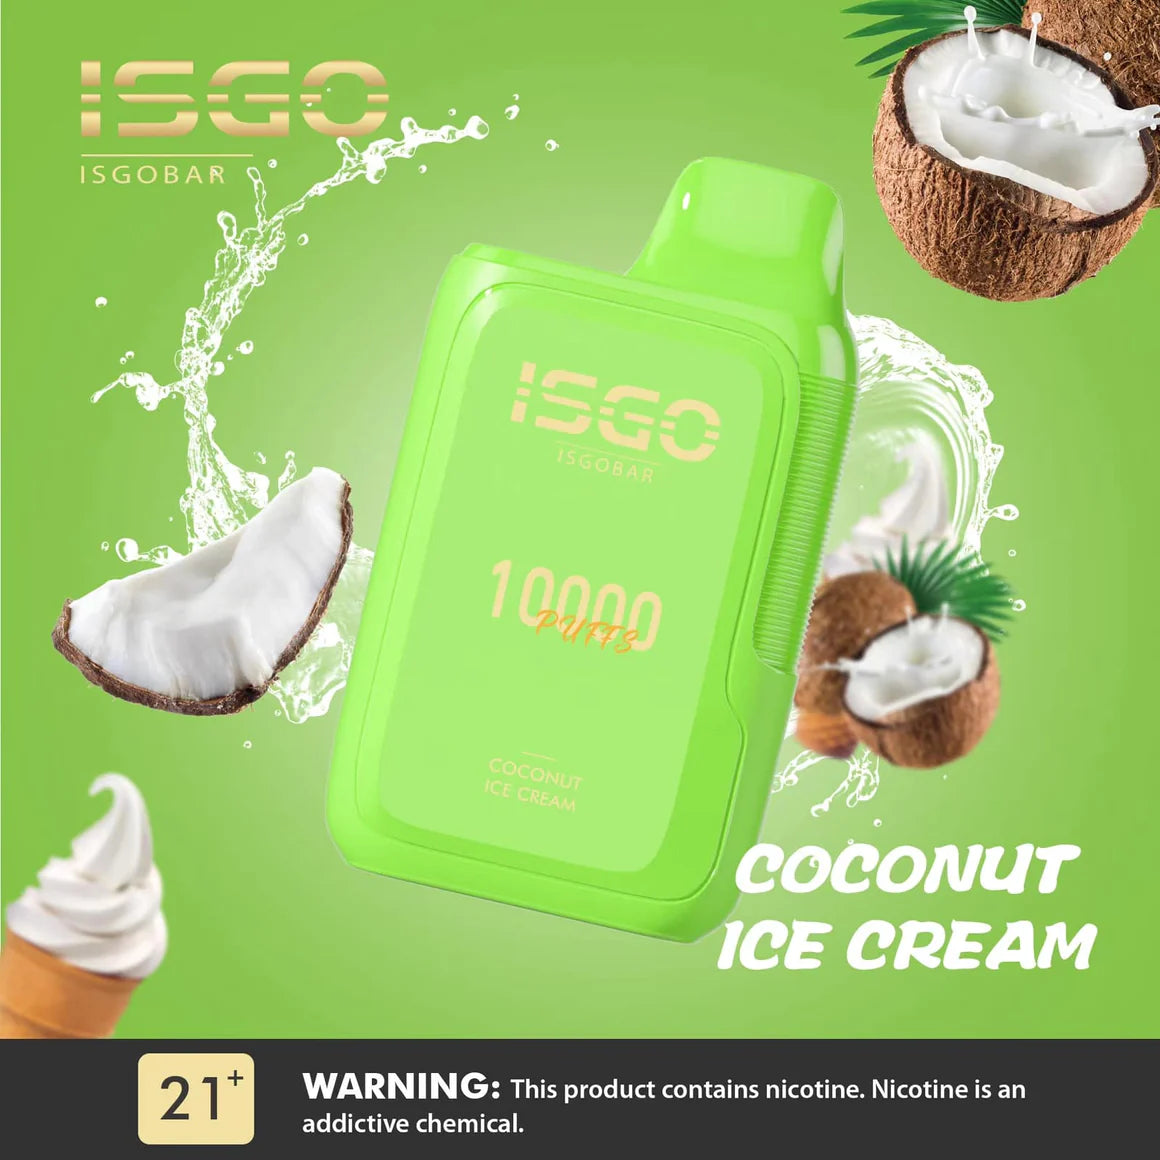 ISGO BAR 10000 - COCONUT ICE CREAM